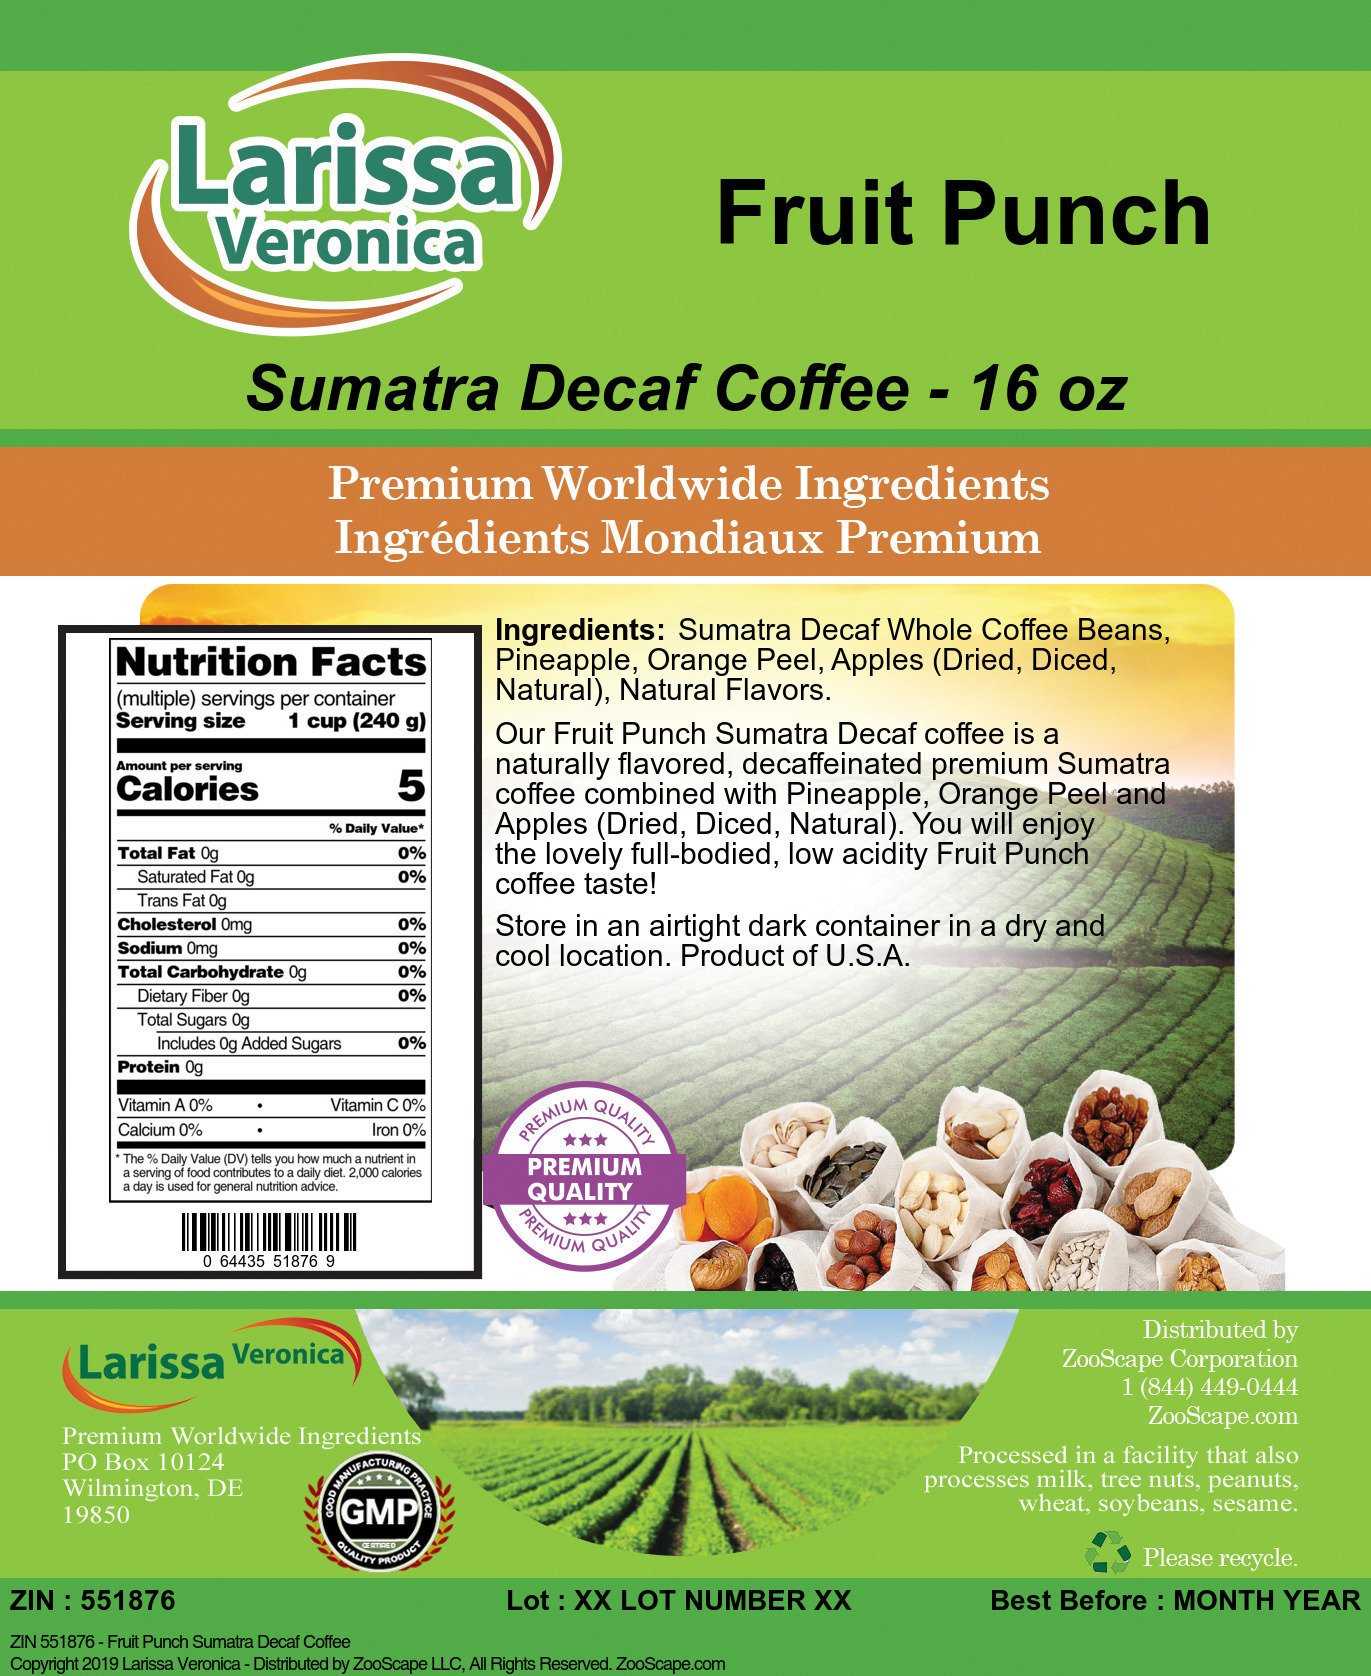 Fruit Punch Sumatra Decaf Coffee - Label